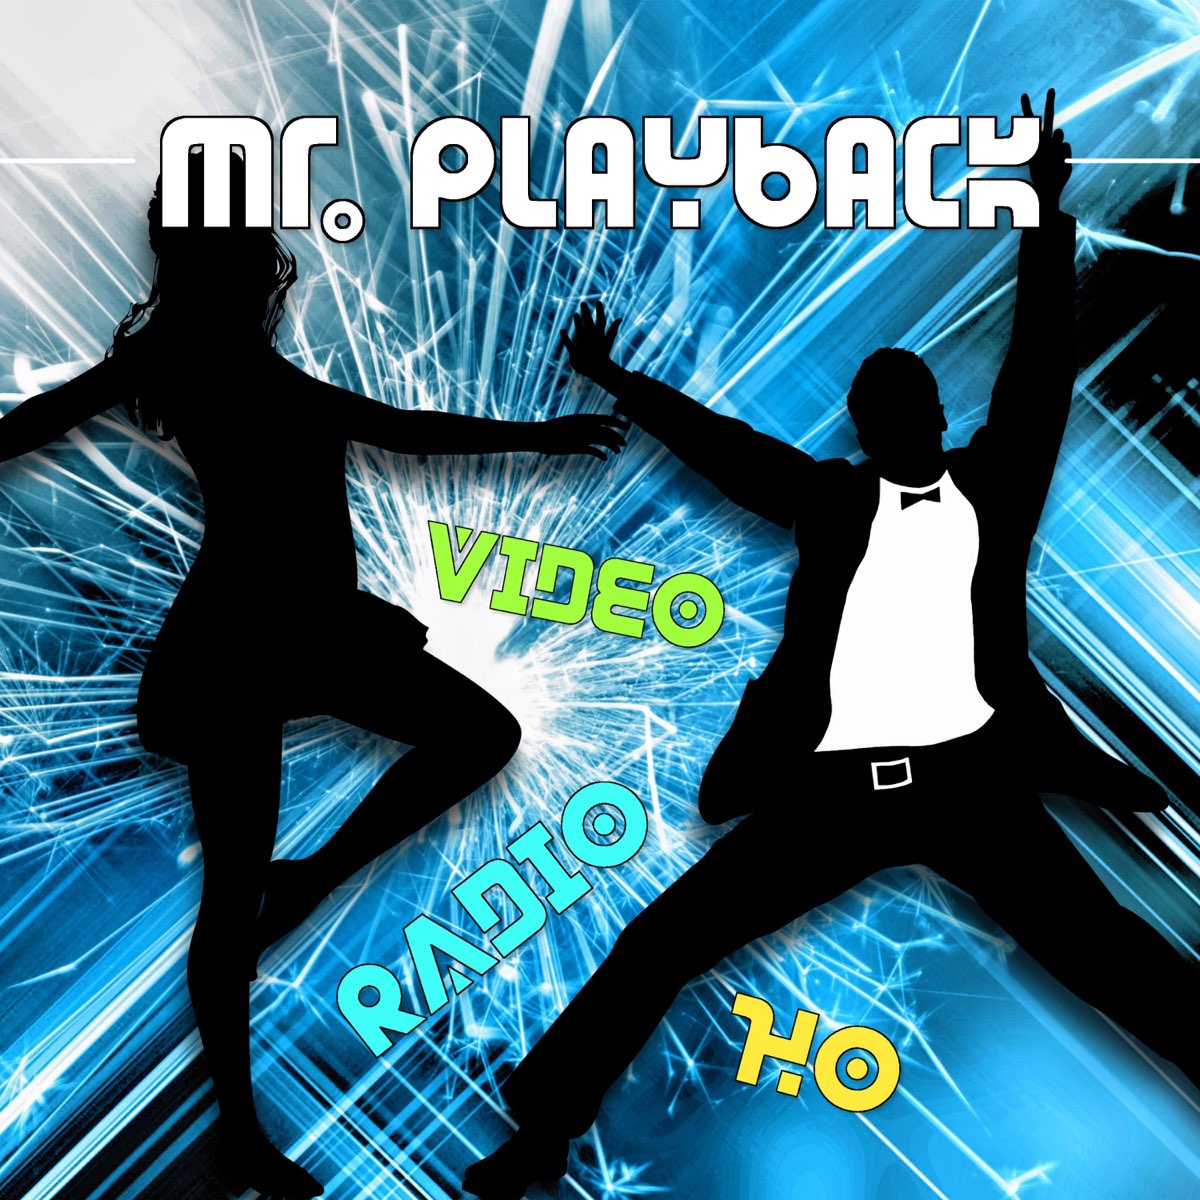 Включи песню мистера. Музыка m r. Mr. ho. Плейбек видео. Videoplayback.mp3.